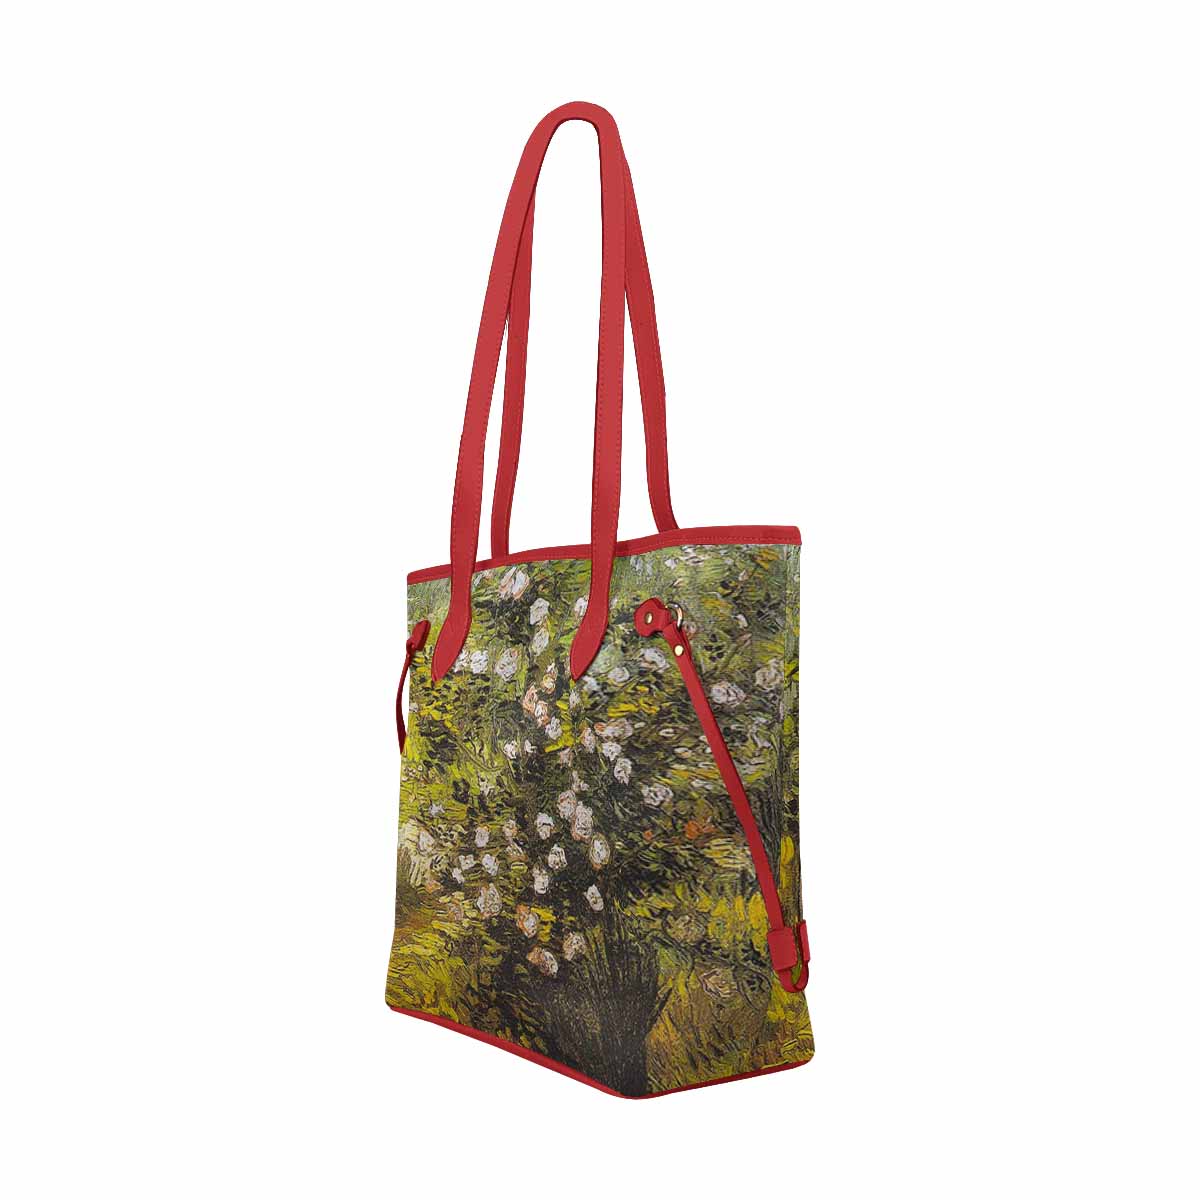 Vintage Floral Handbag, Classic Handbag, Mod 1695361 Design 05, RED TRIM